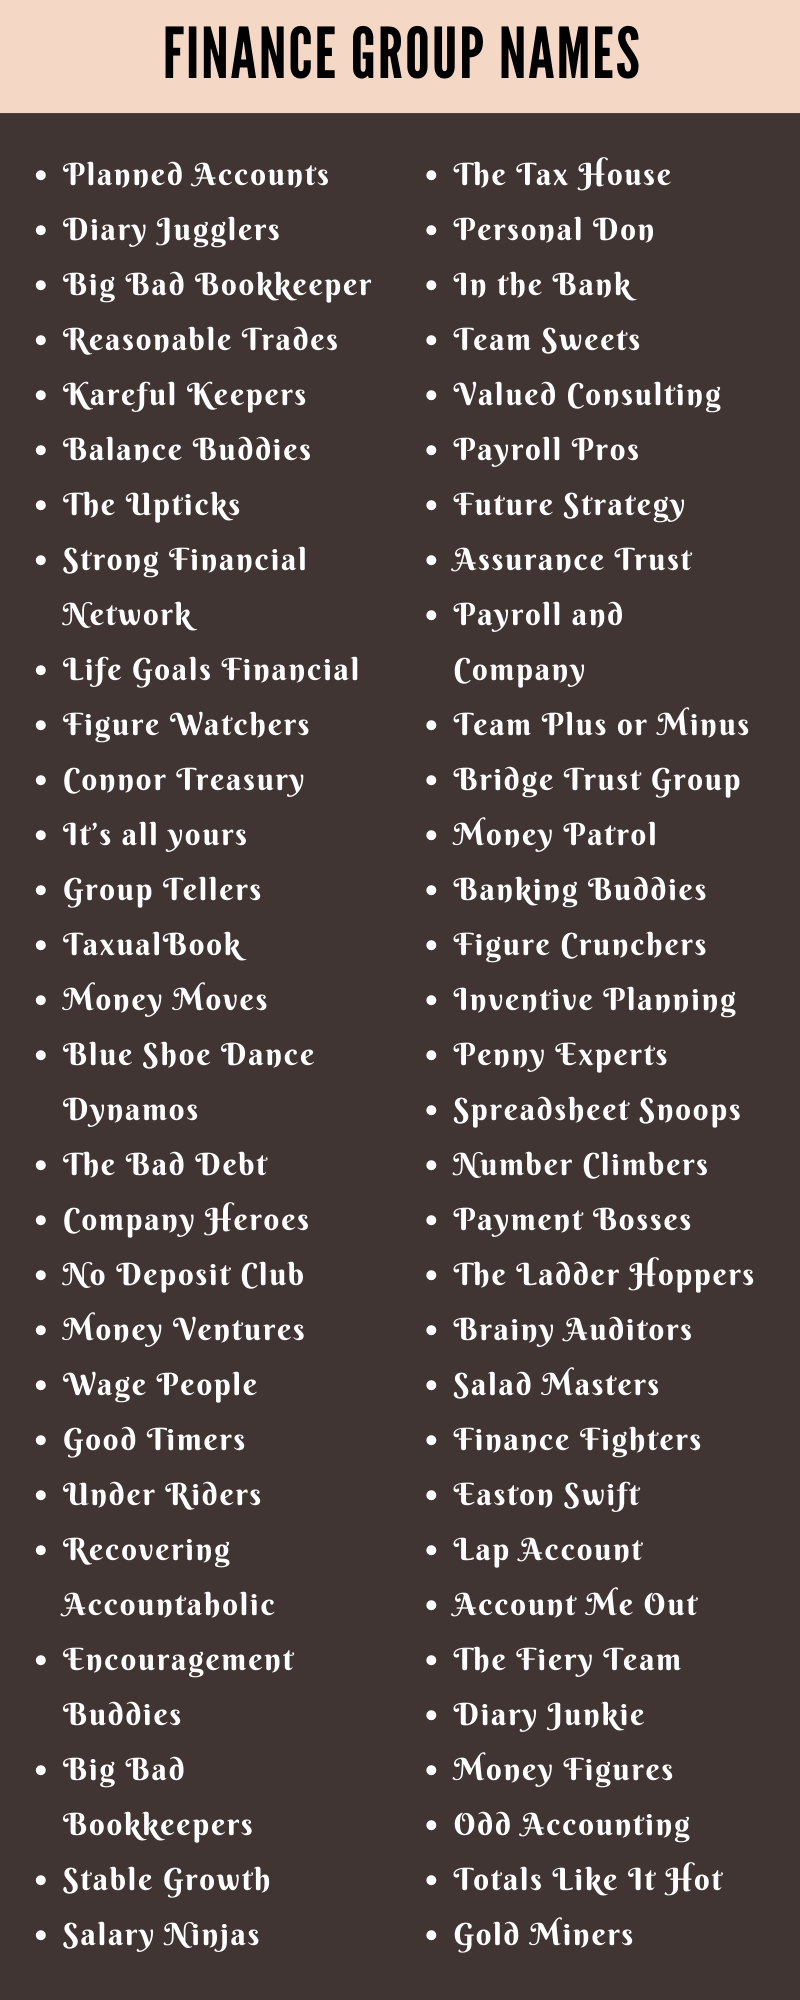 Finance Group Names